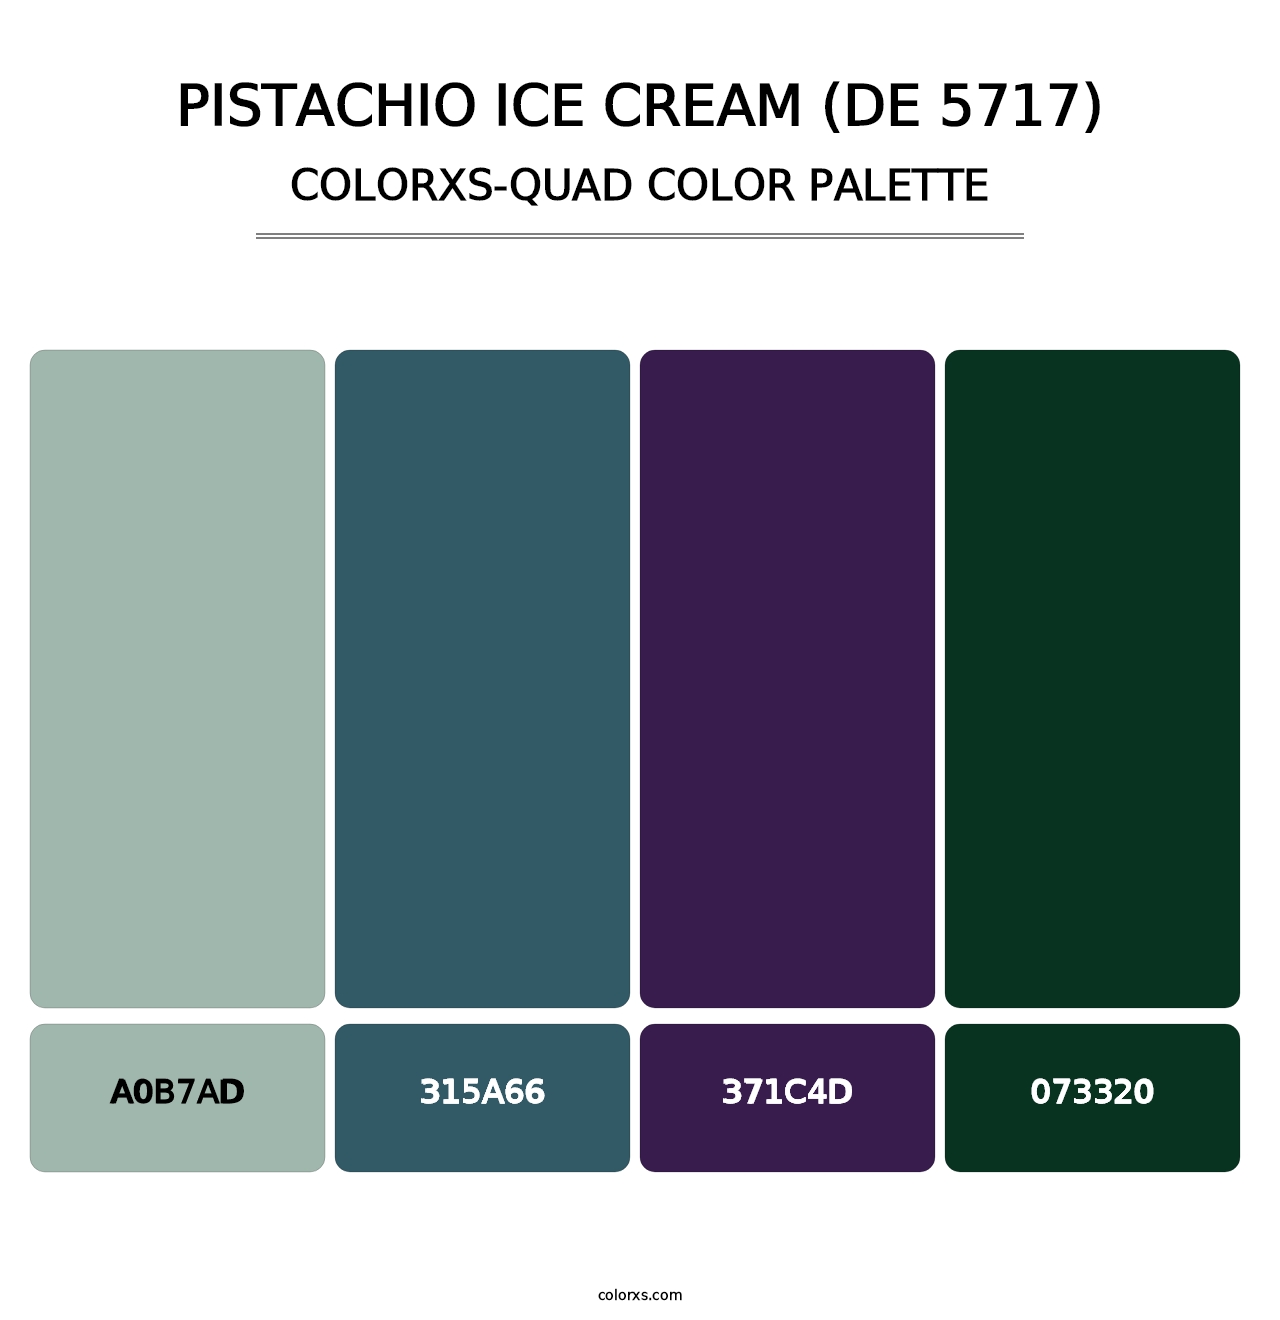 Pistachio Ice Cream (DE 5717) - Colorxs Quad Palette